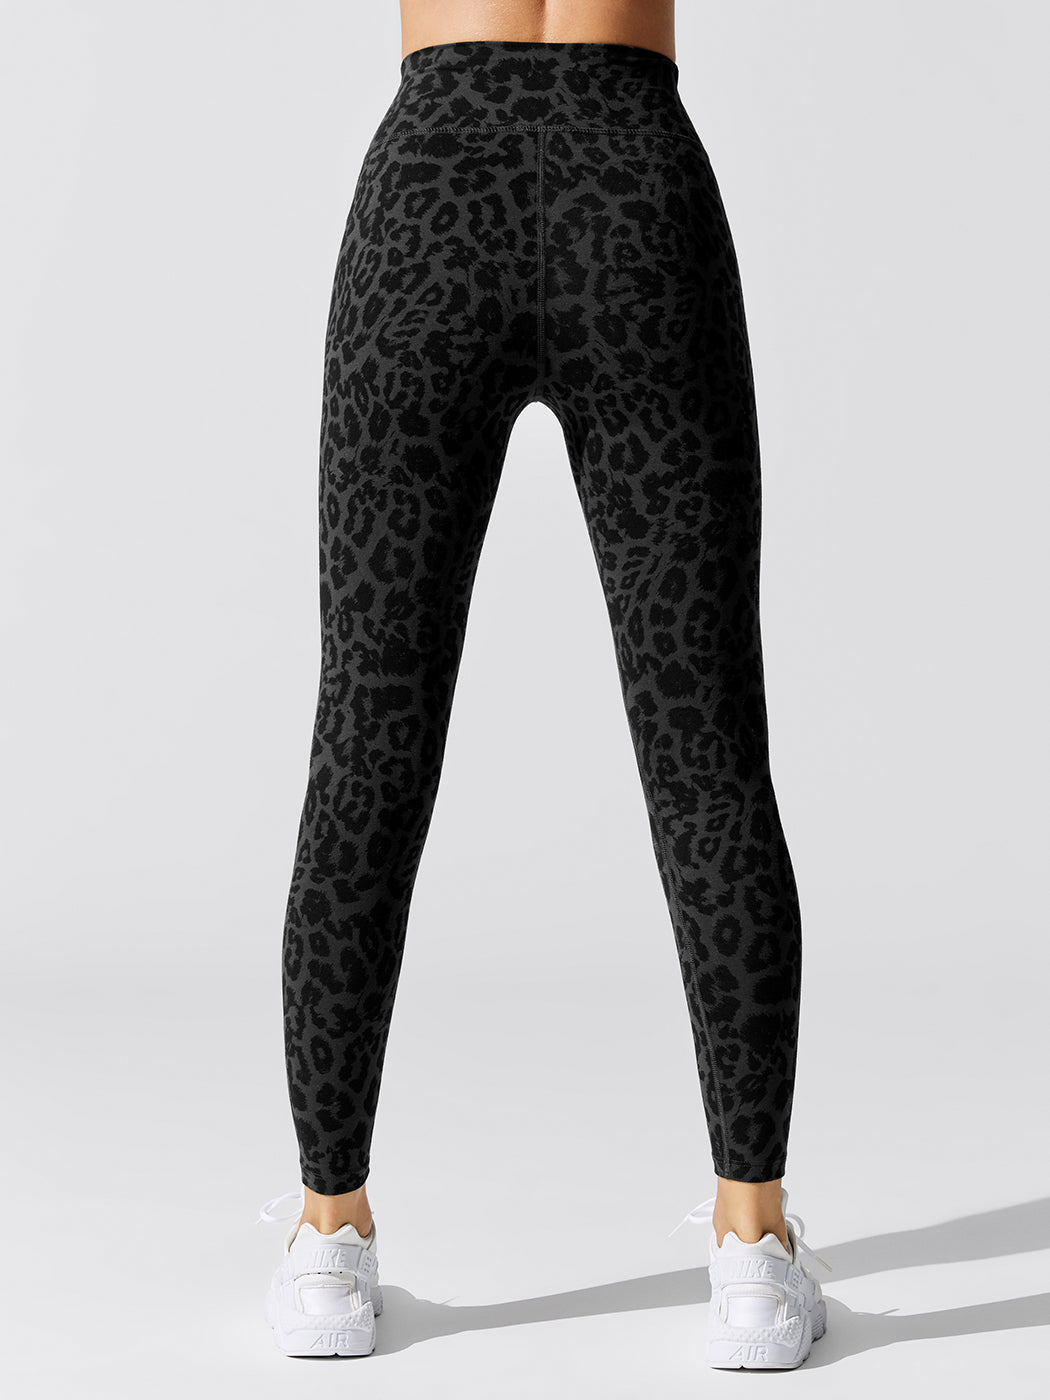 Carbon38, Pants & Jumpsuits, Carbon38 Leopard Takara Shine Leggings Black  Nwt Sz Xl